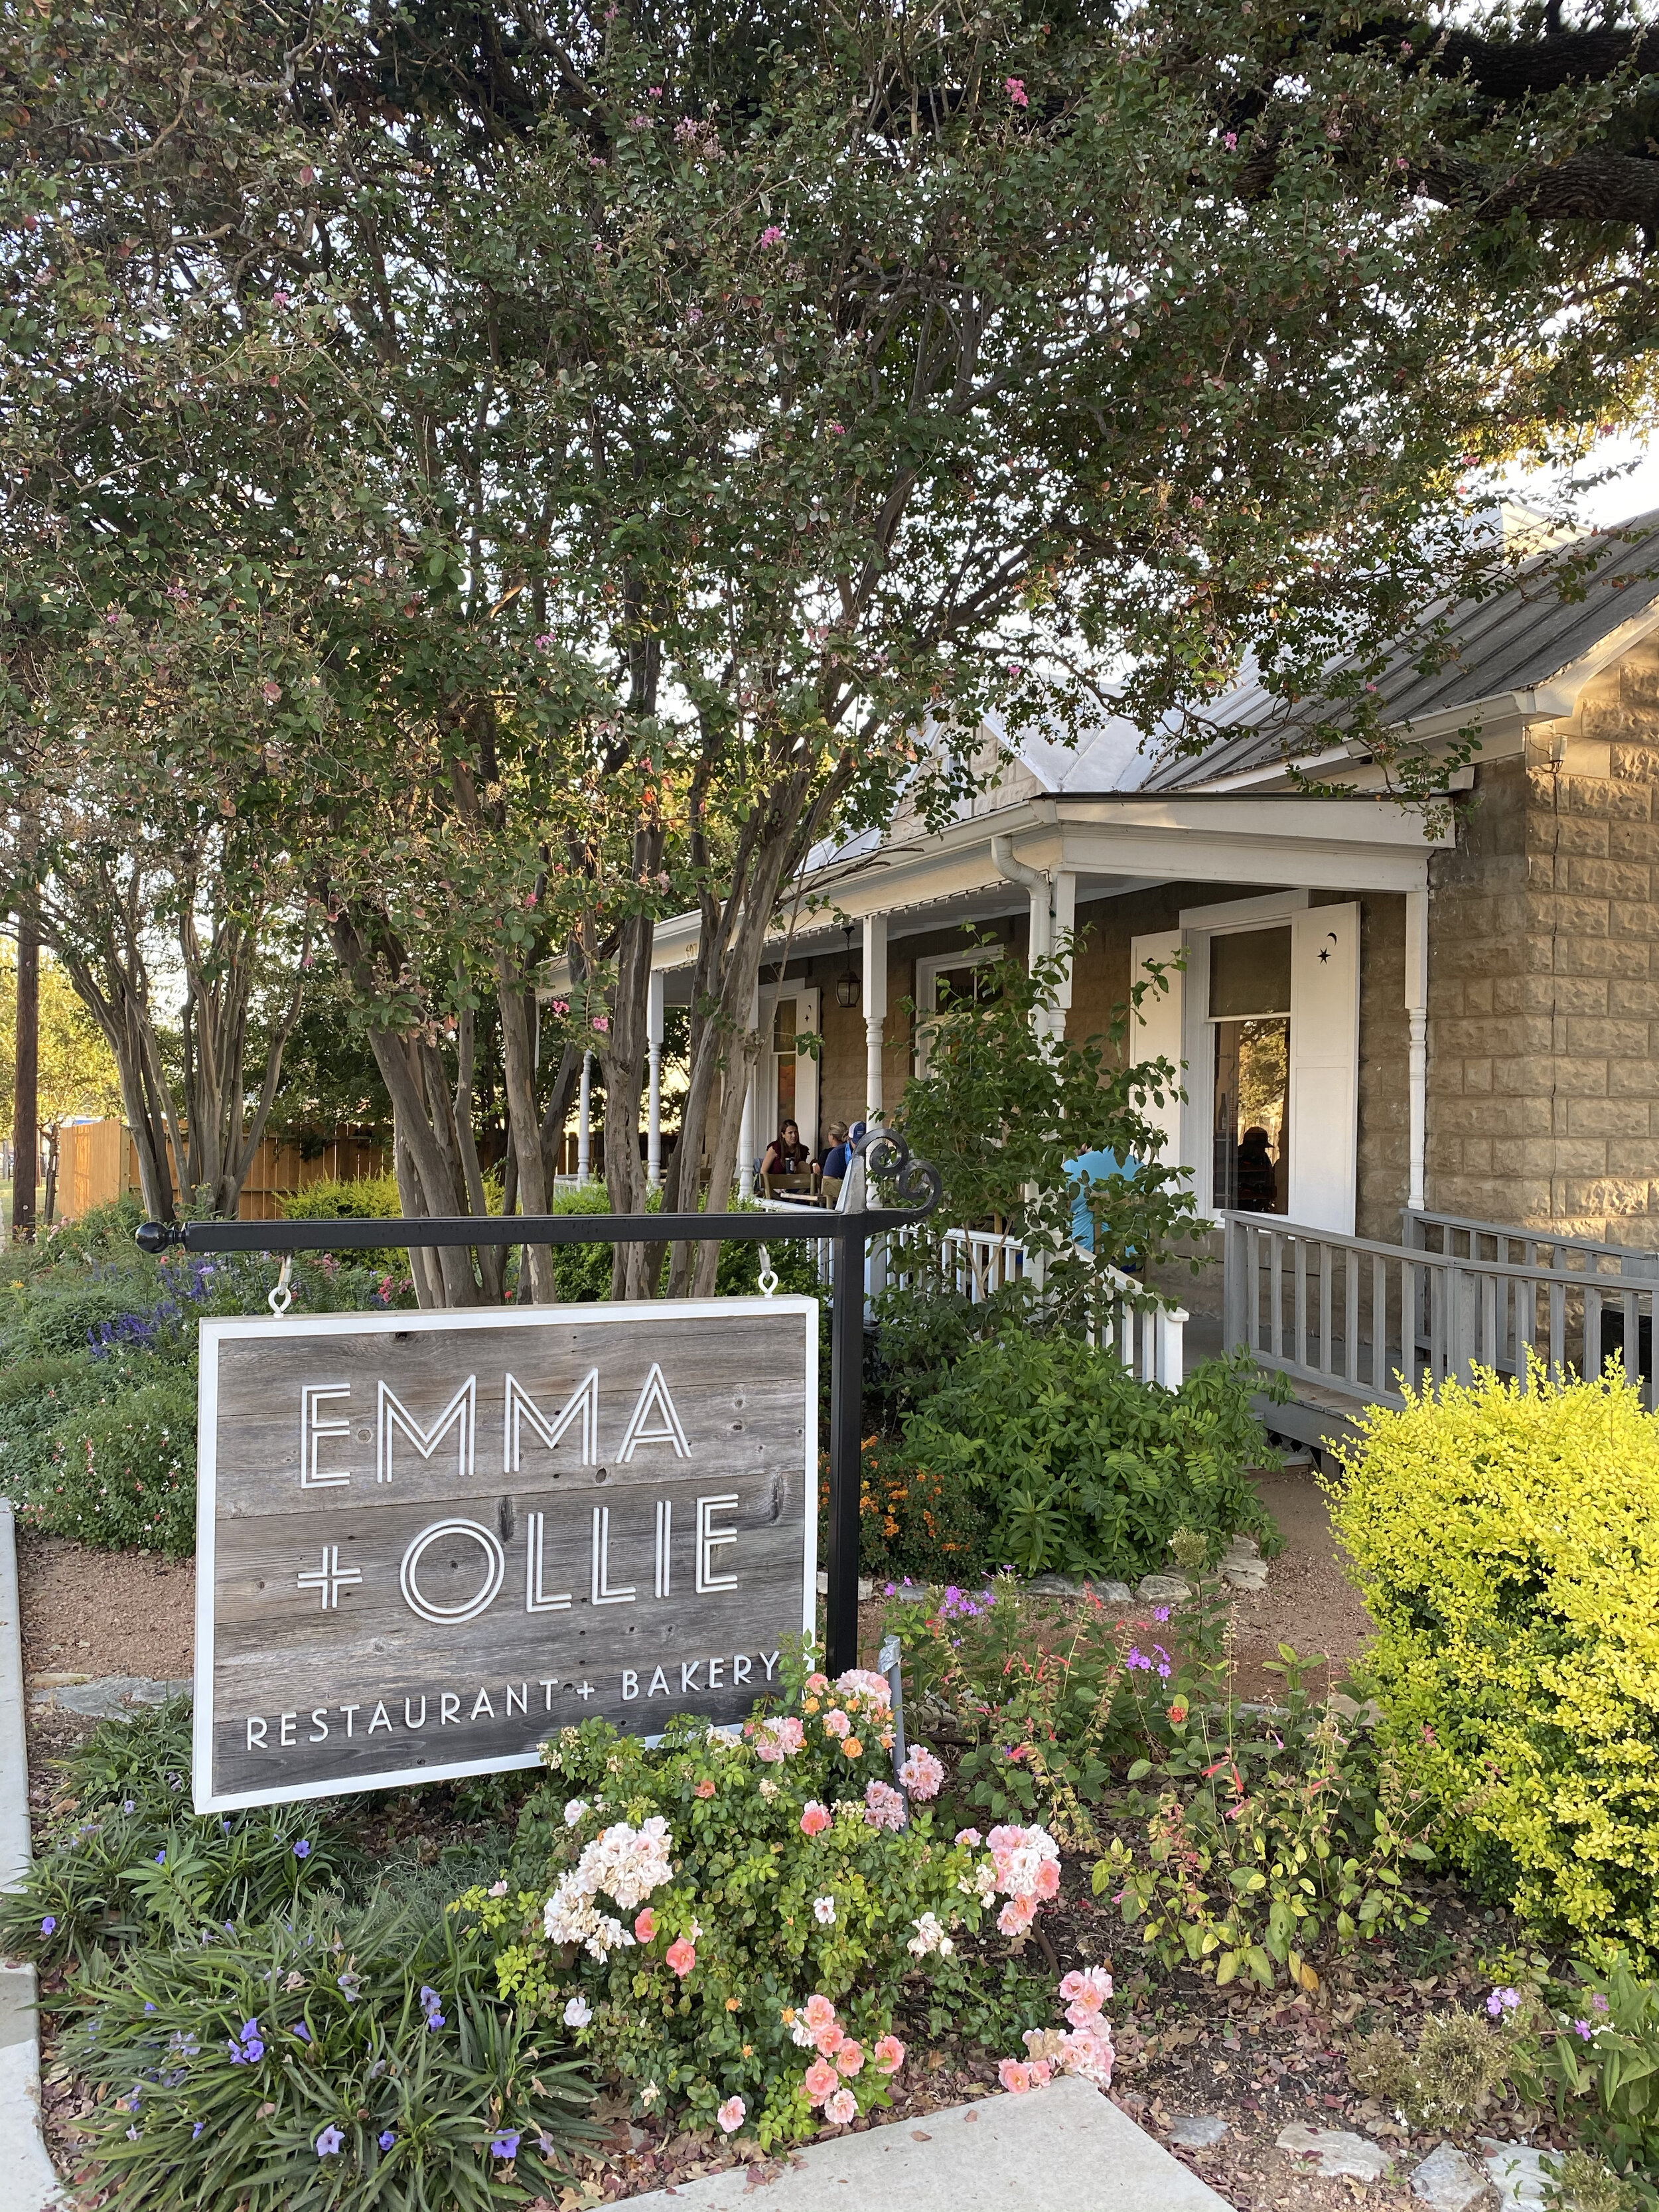 Emma + Ollie restaurant and bakery